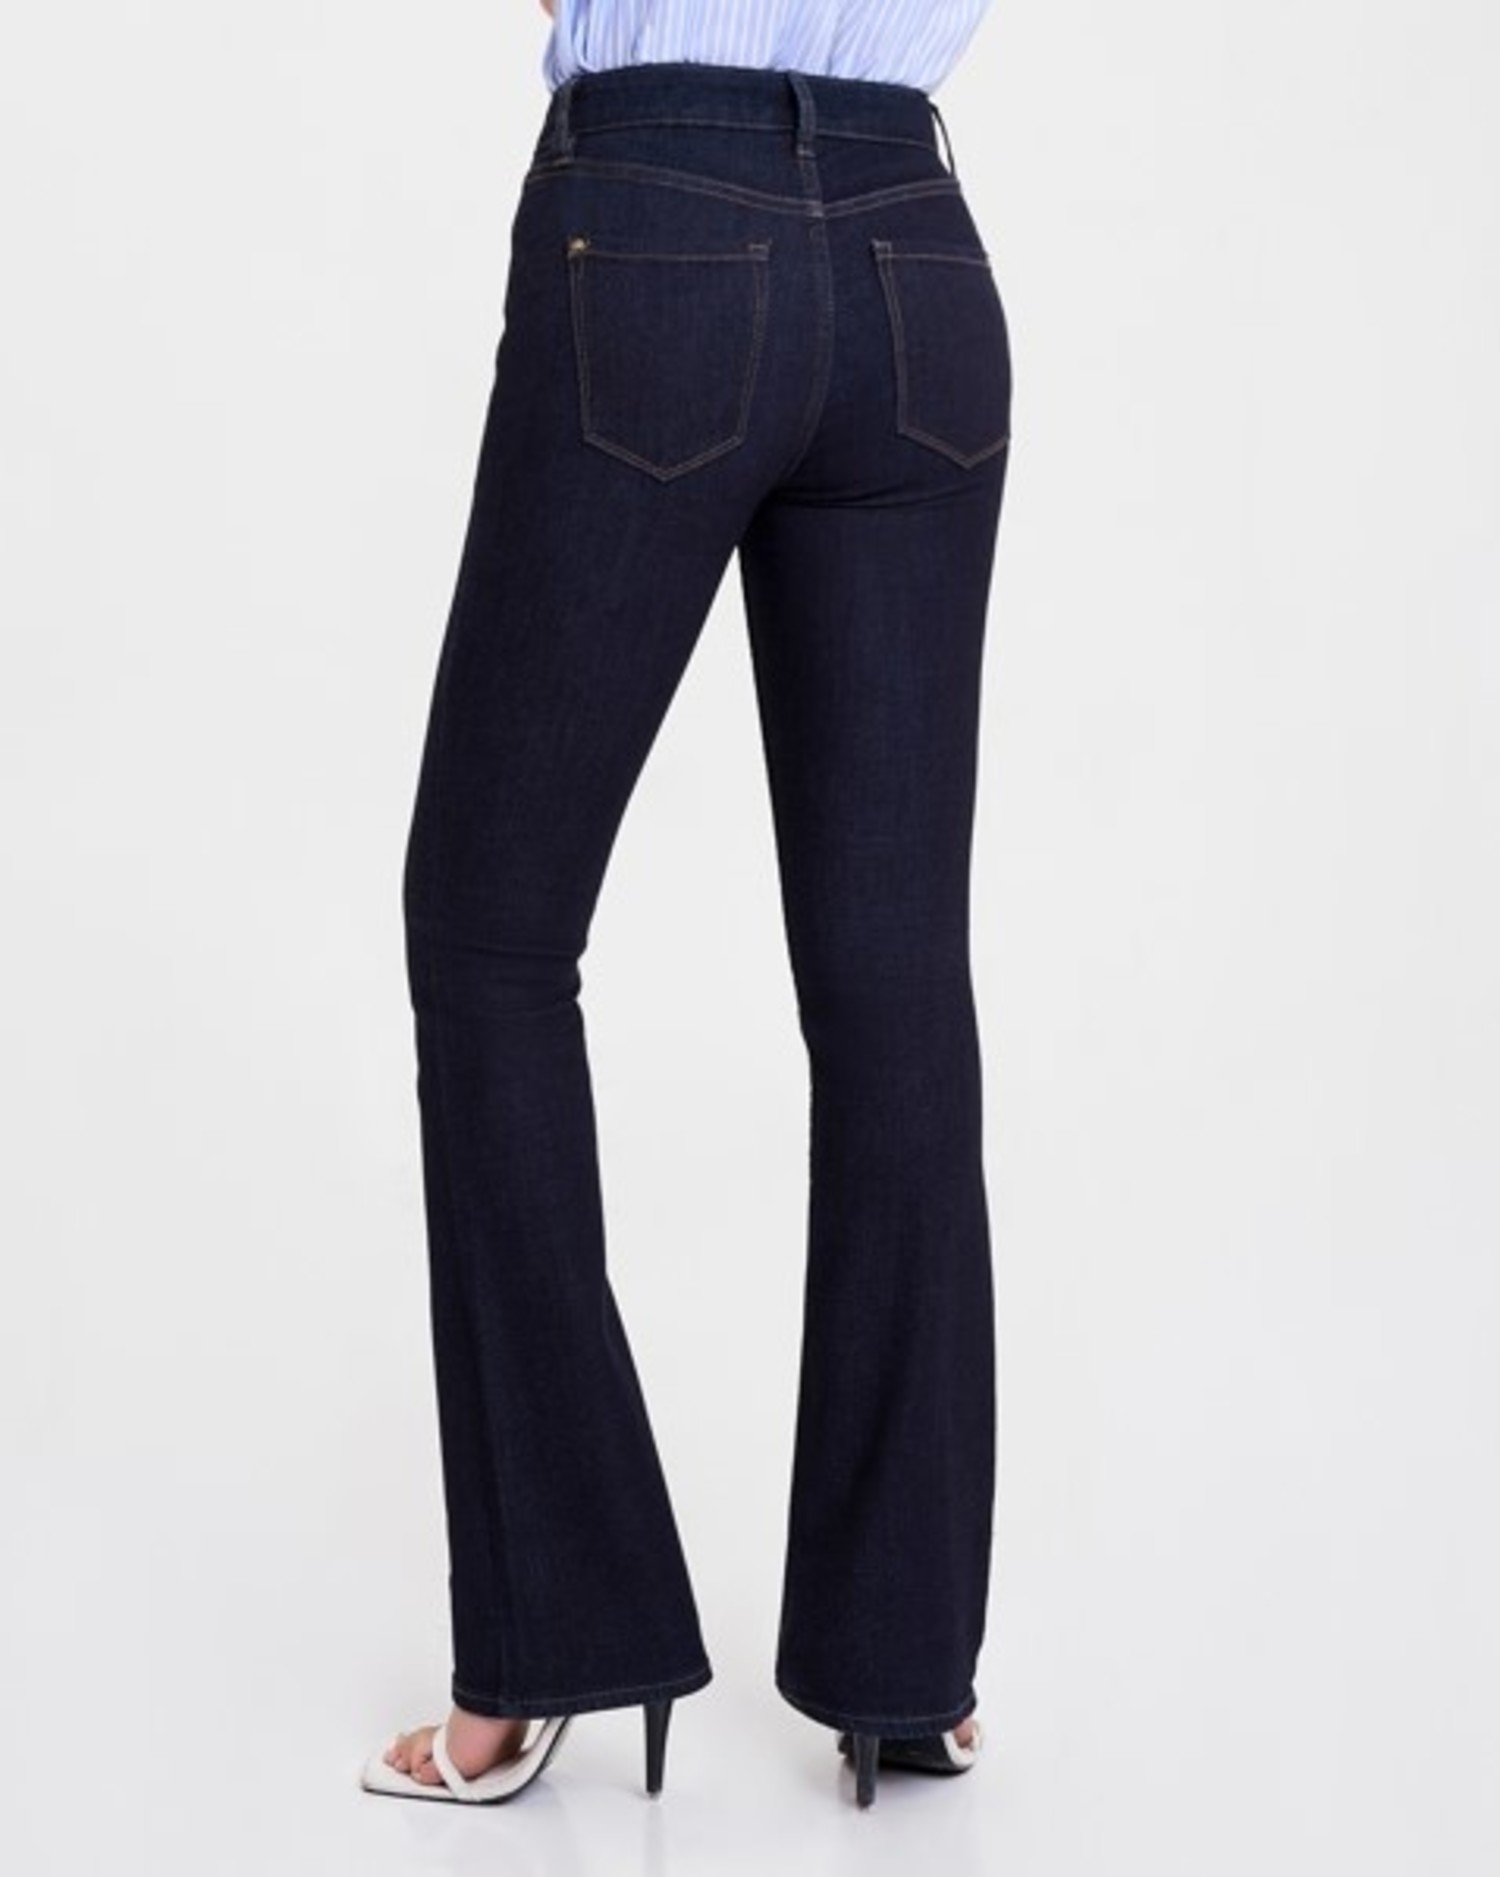 https://cdn.shoplightspeed.com/shops/632629/files/49036899/1500x4000x3/v-sixtyfour-dark-blue-flared-fit-jeans.jpg